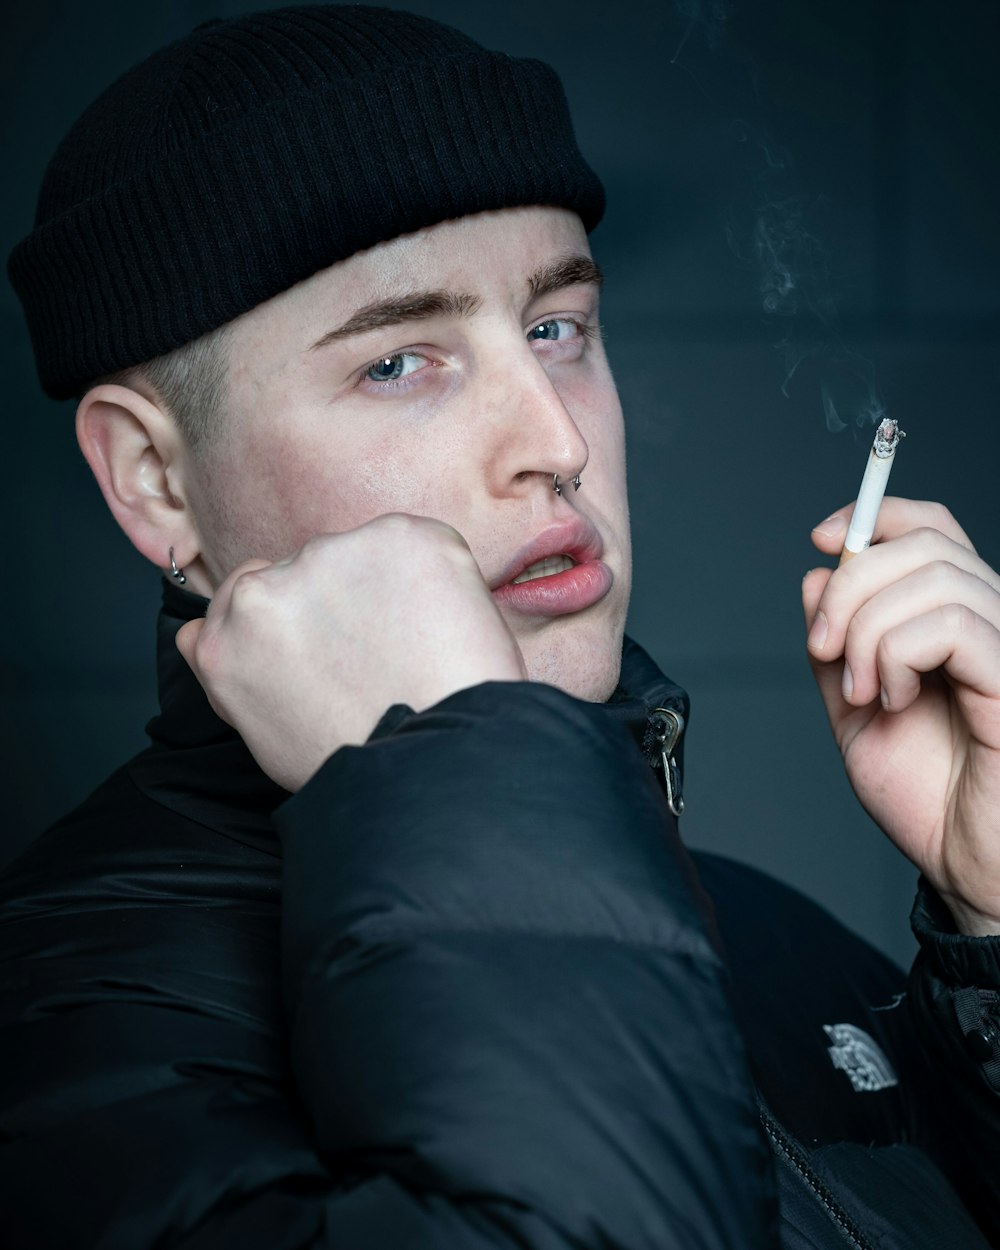 man wearing black jacket holding cigarette stick